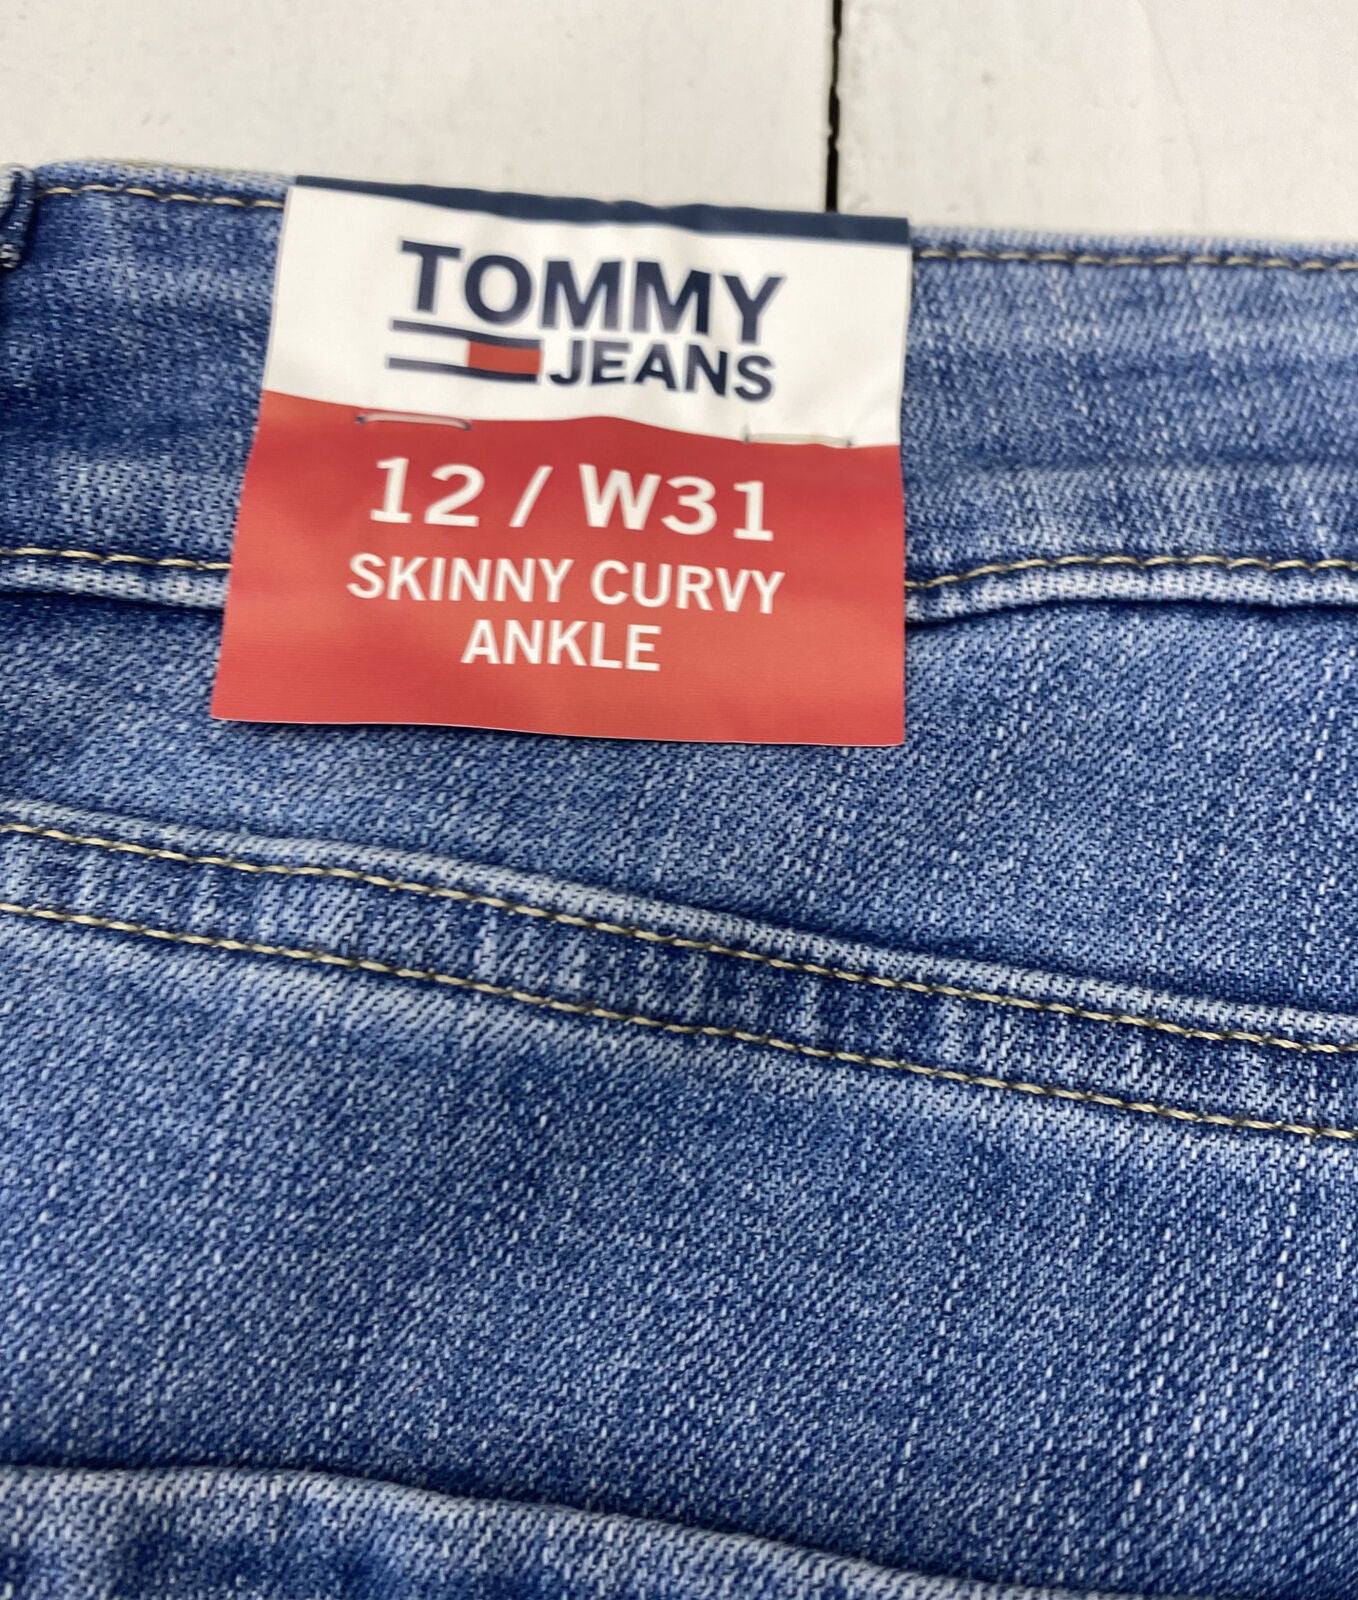 exchange Size Tommy Jean - 12/31 New Skinny TOBKOFZC Ankle Hilfiger Womens beyond Curvy